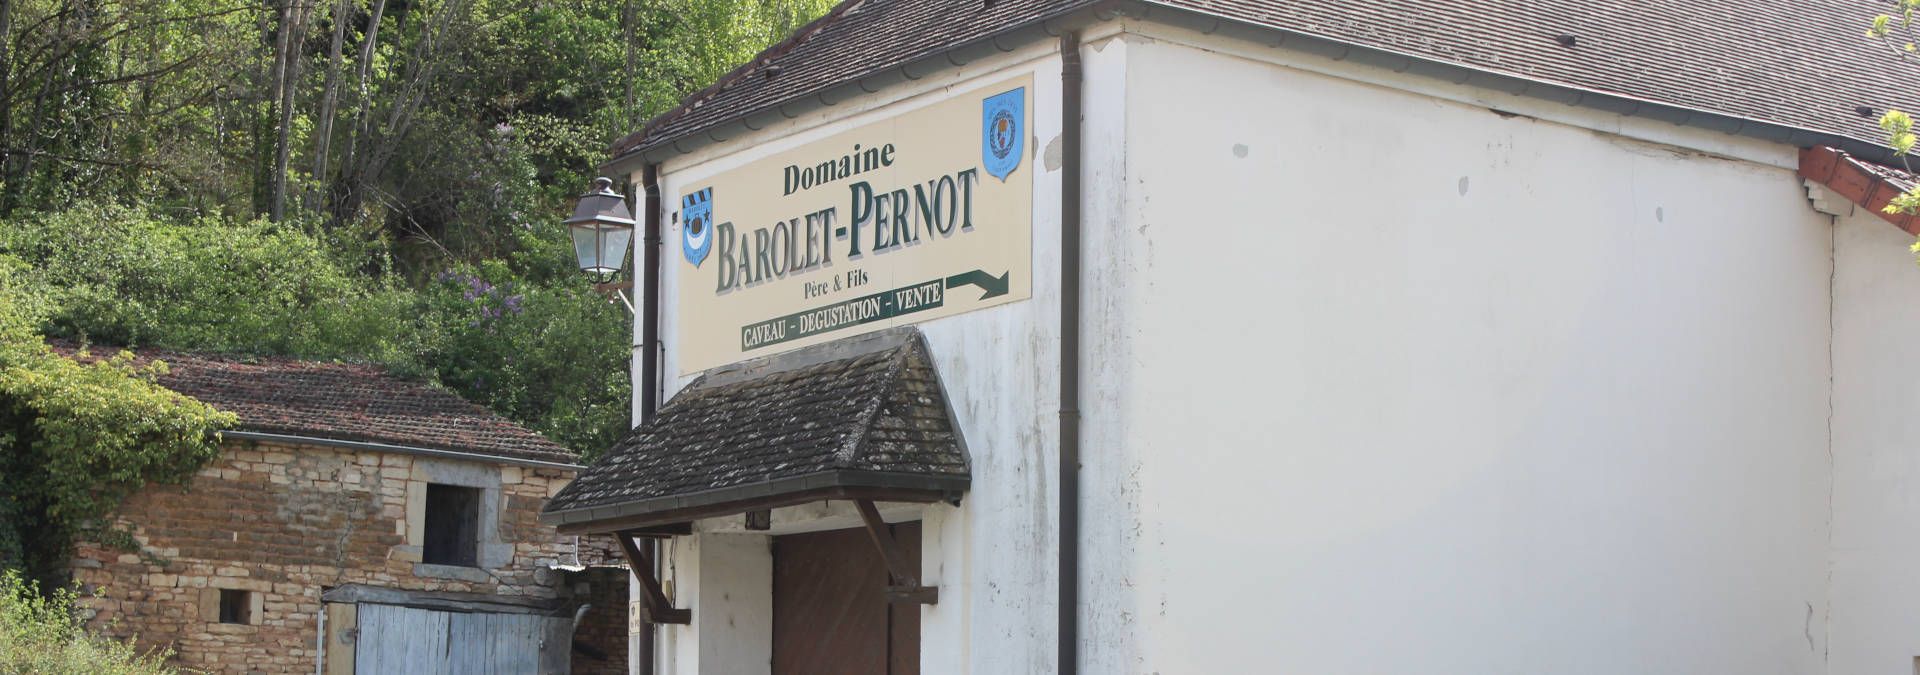 Domaine Barolet Pernot - Rue des vignerons